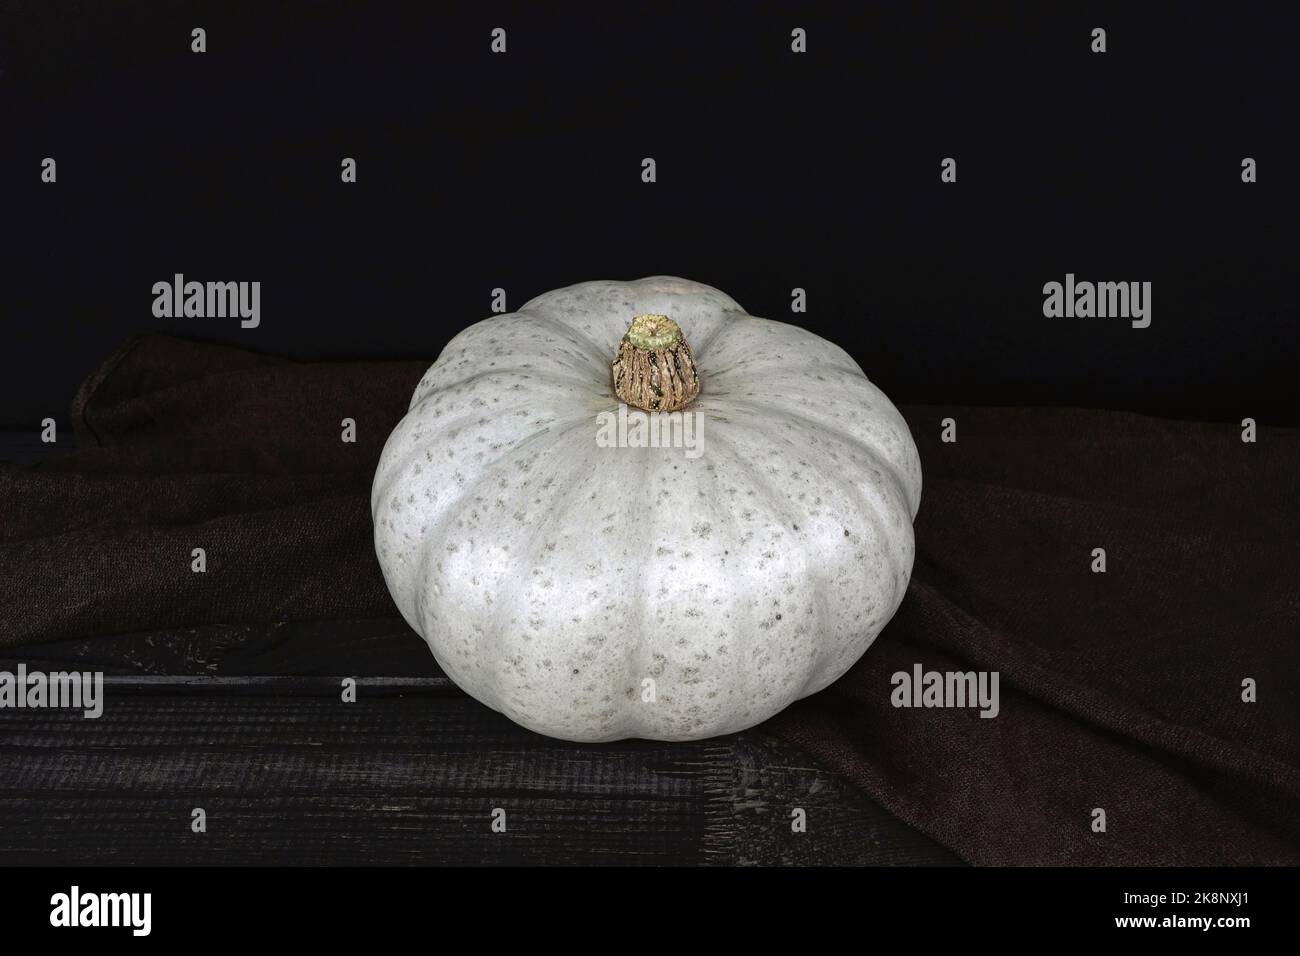 grey skin 'Crown prince' pumpkin with black background Stock Photo